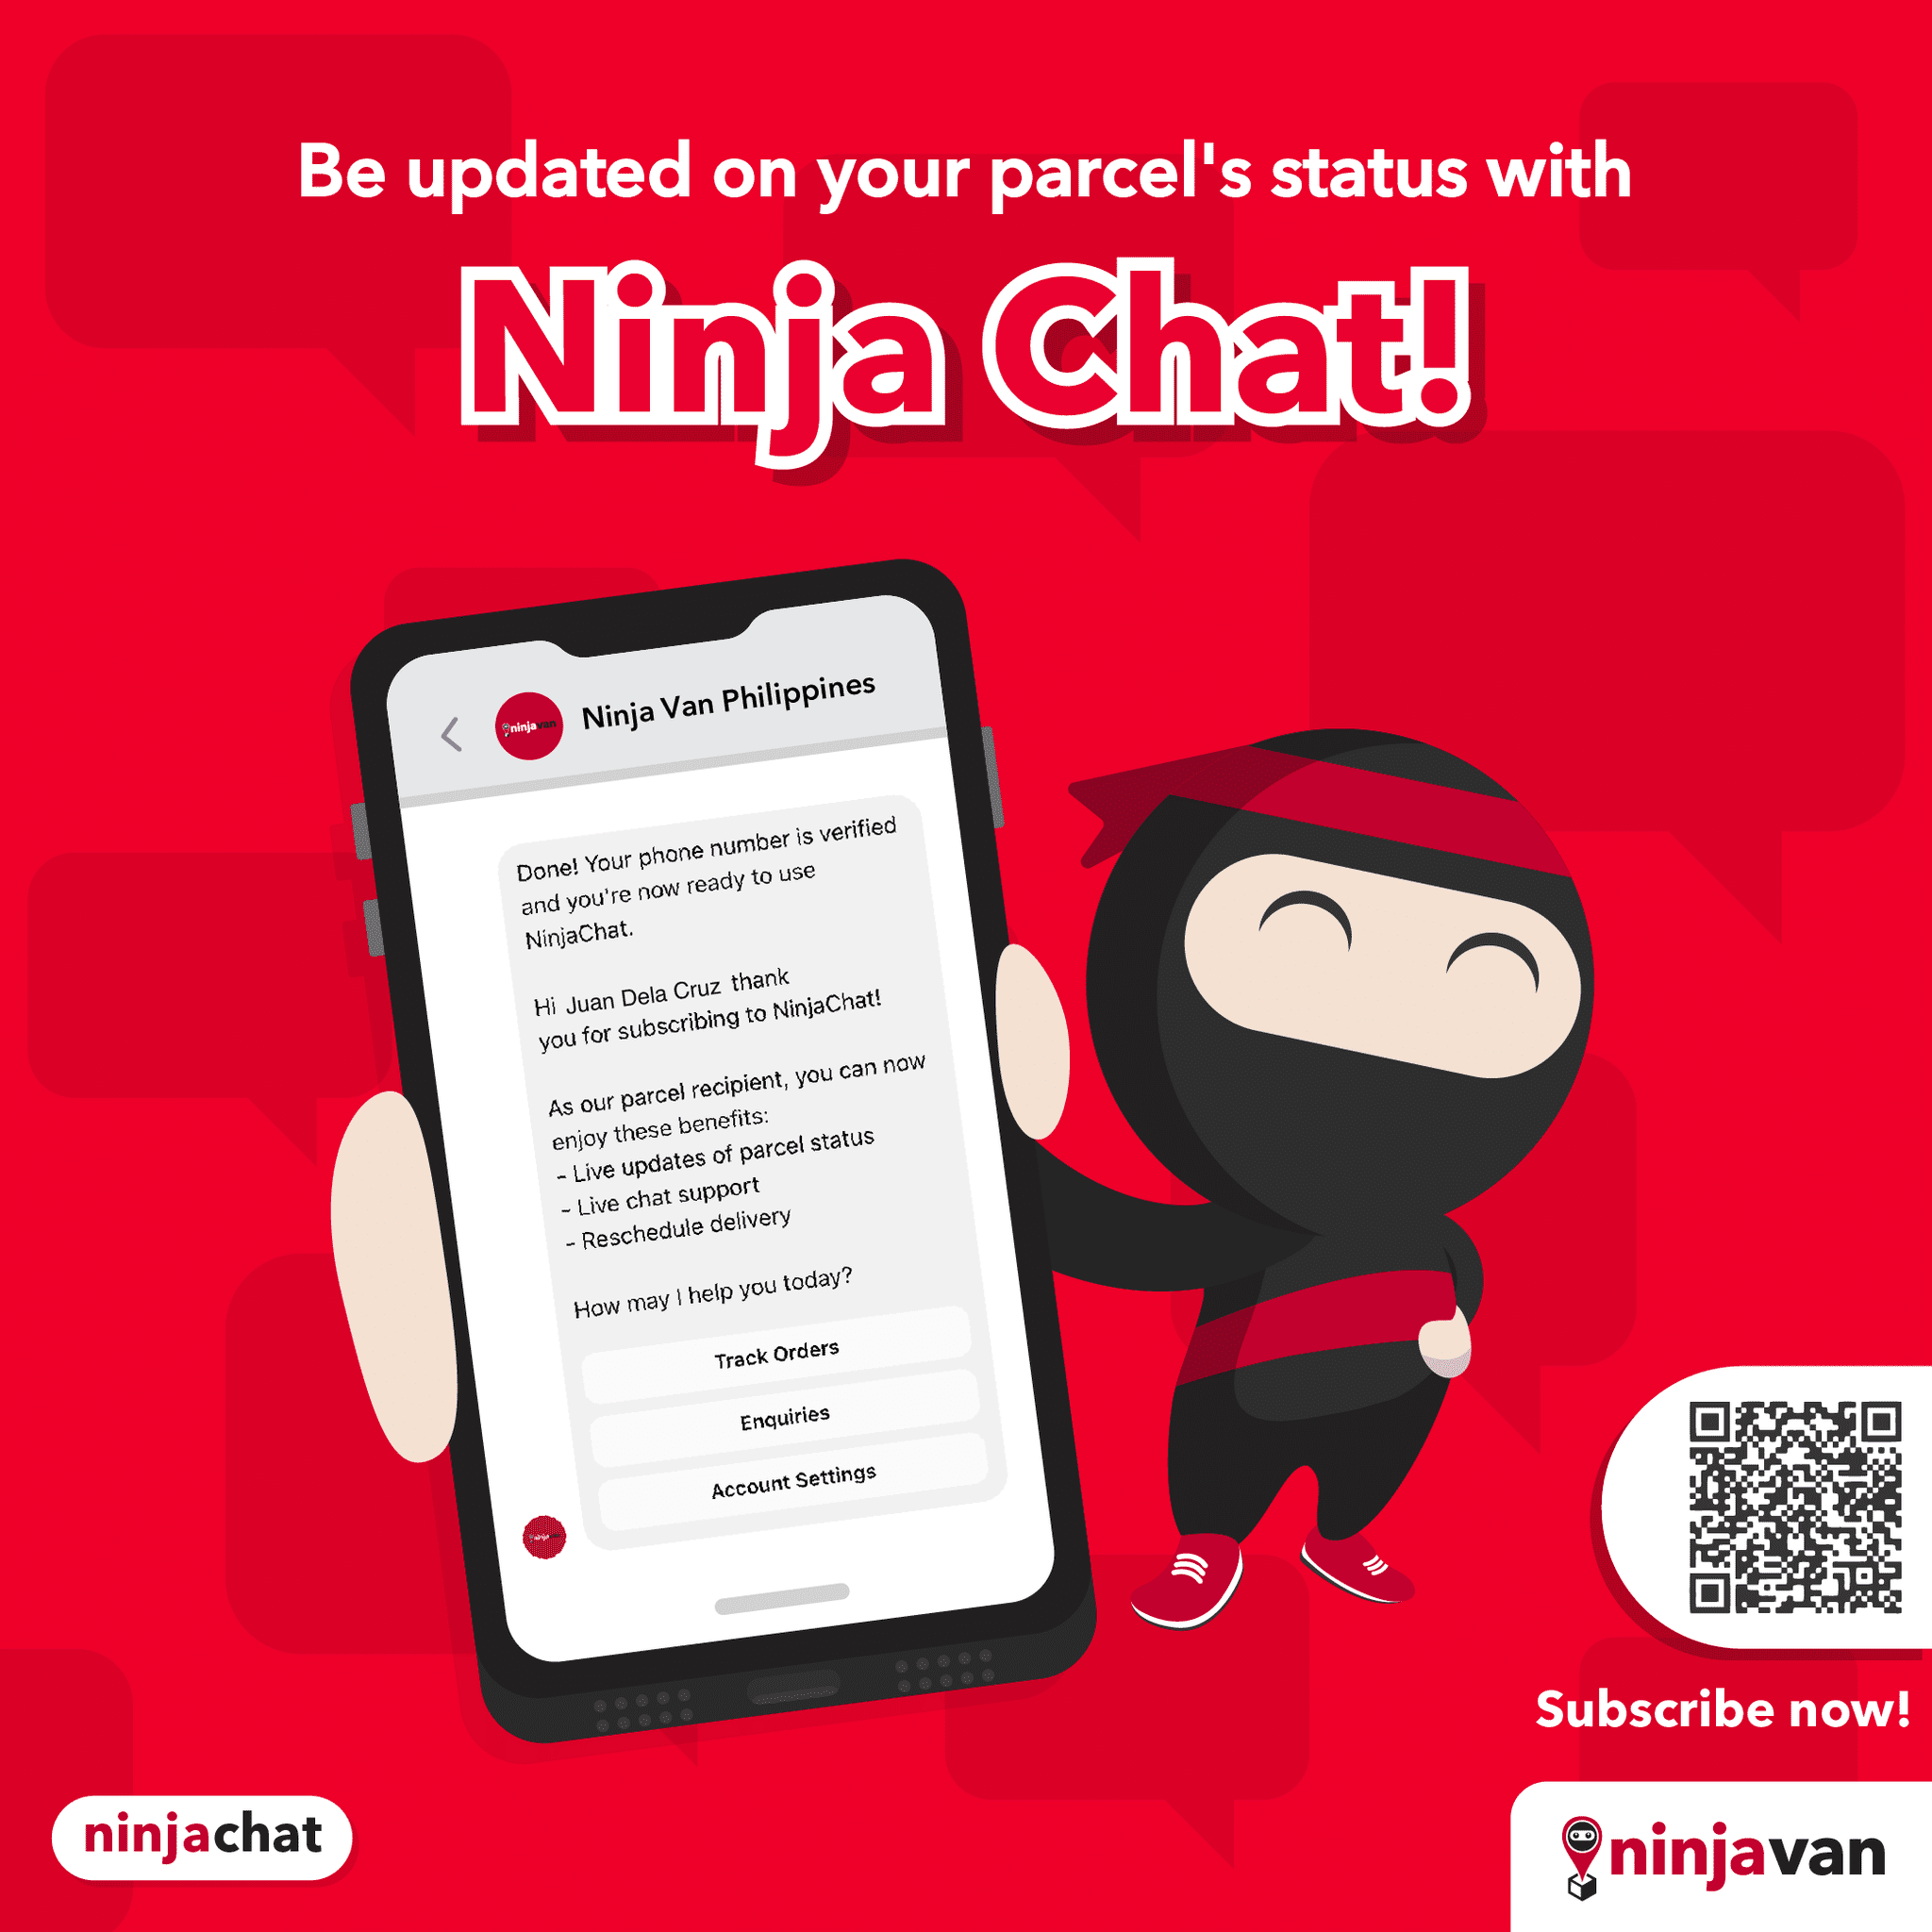 Ninja Chat